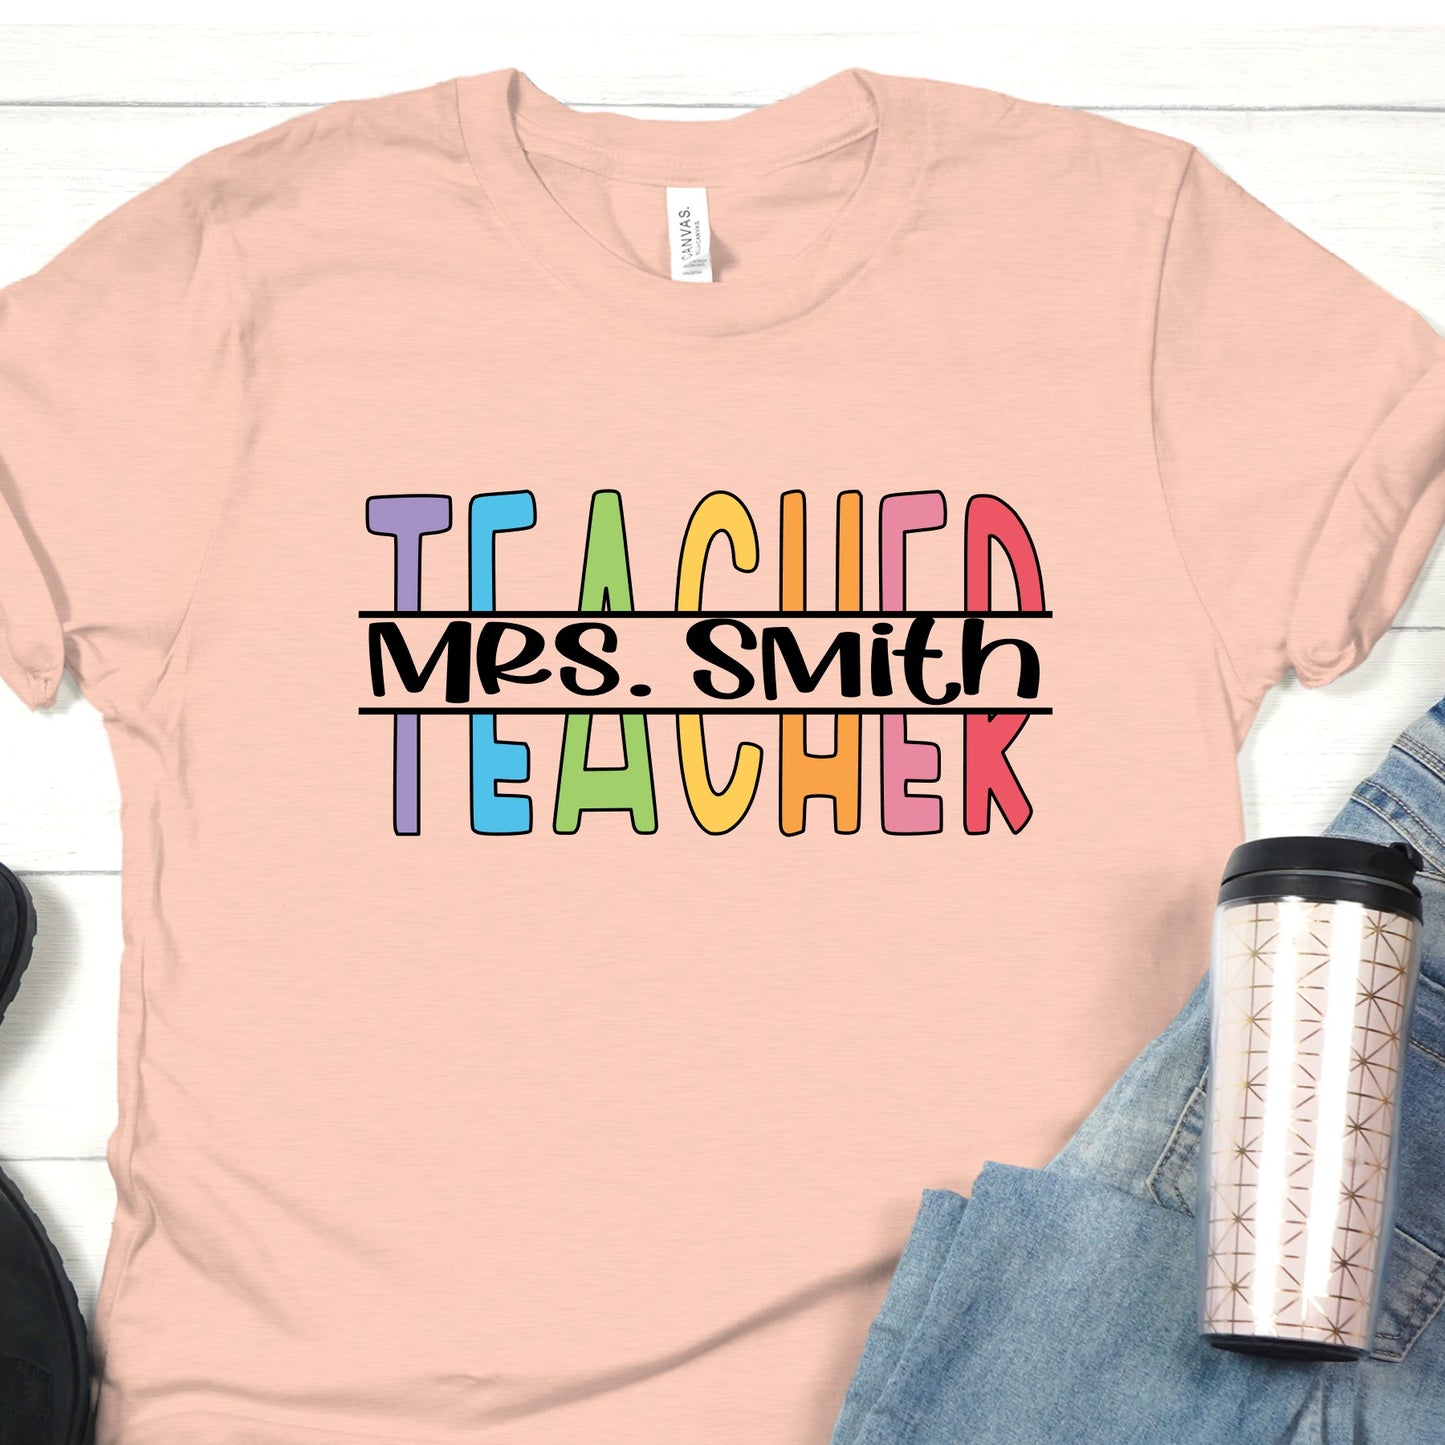 TEACHER Personalized Shirt